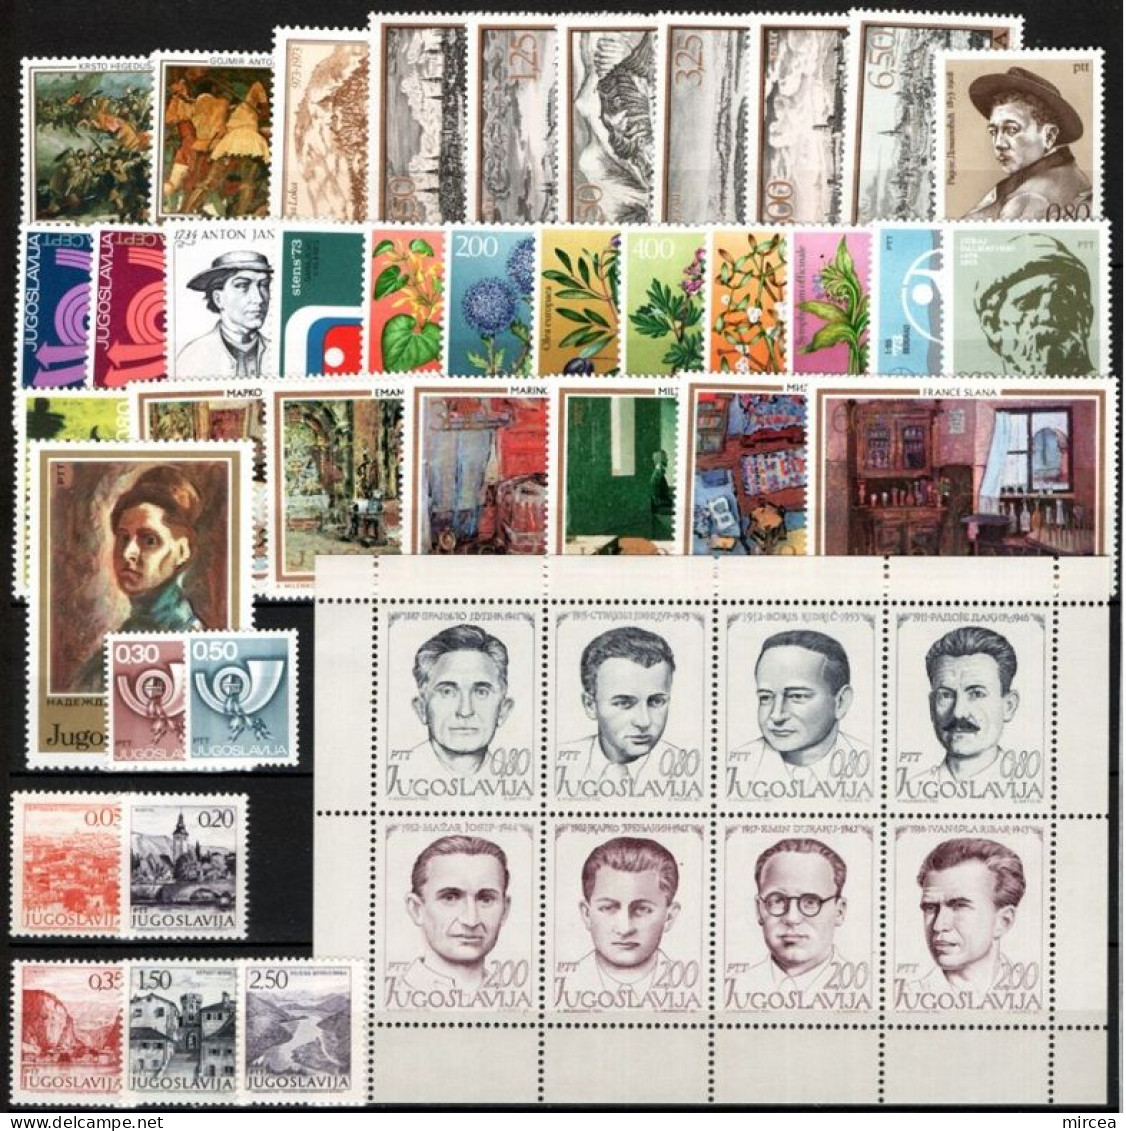 C5471 - Yougoslavie 1973 - Annee Complete,timbres Neufs** - Años Completos